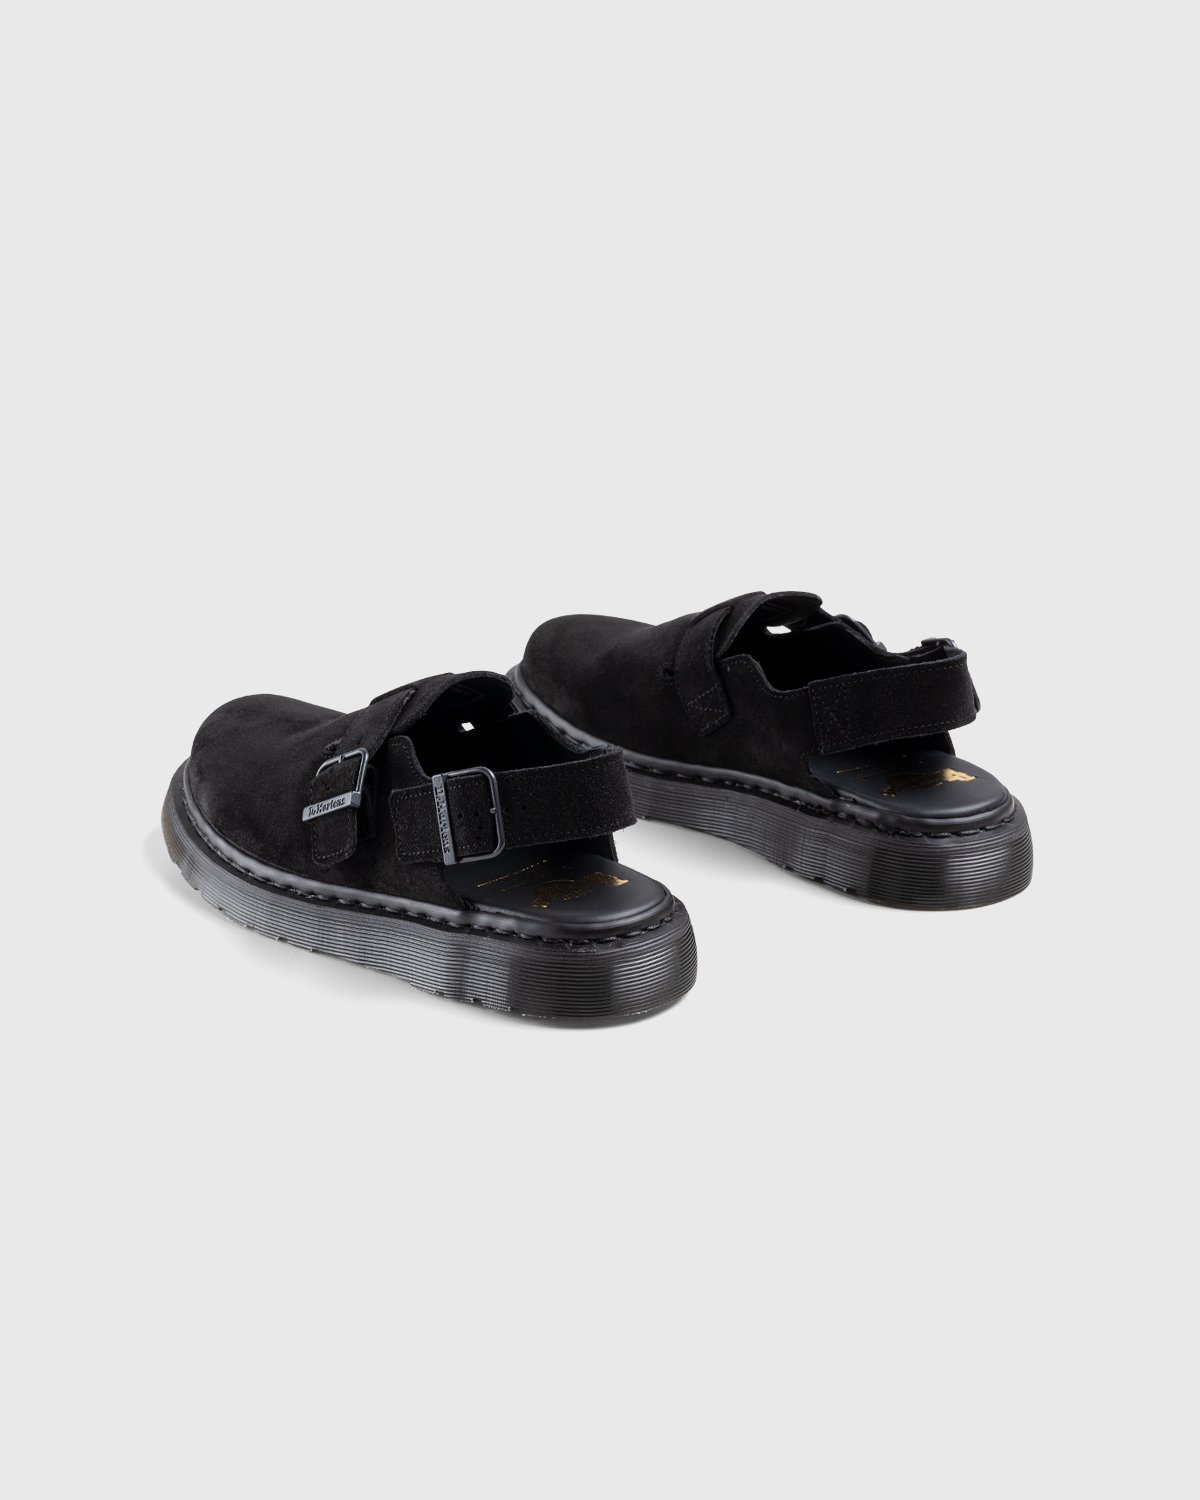 Dr. Martens - Jorge Black Repello Calf Suede - Footwear - Black - Image 4